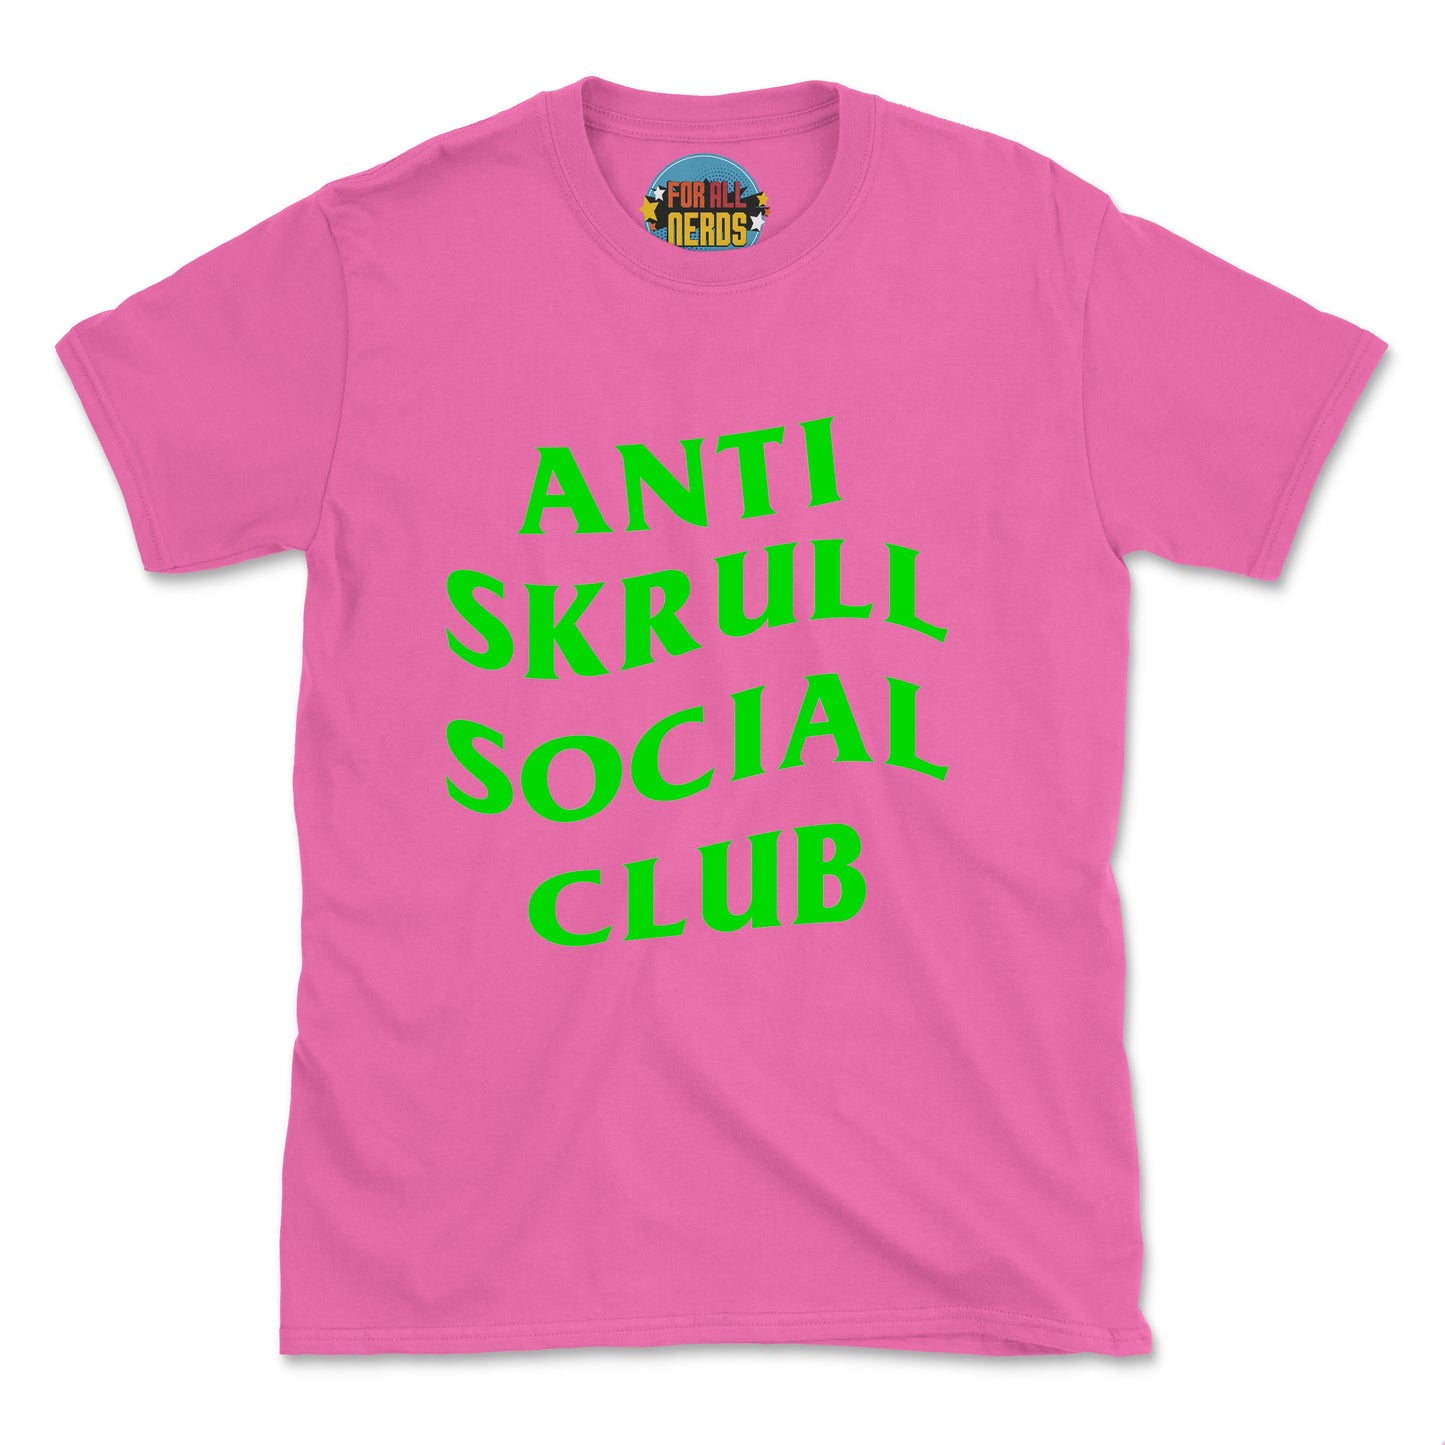 ANTI SKRULL SOCIAL CLUB (PUFF)